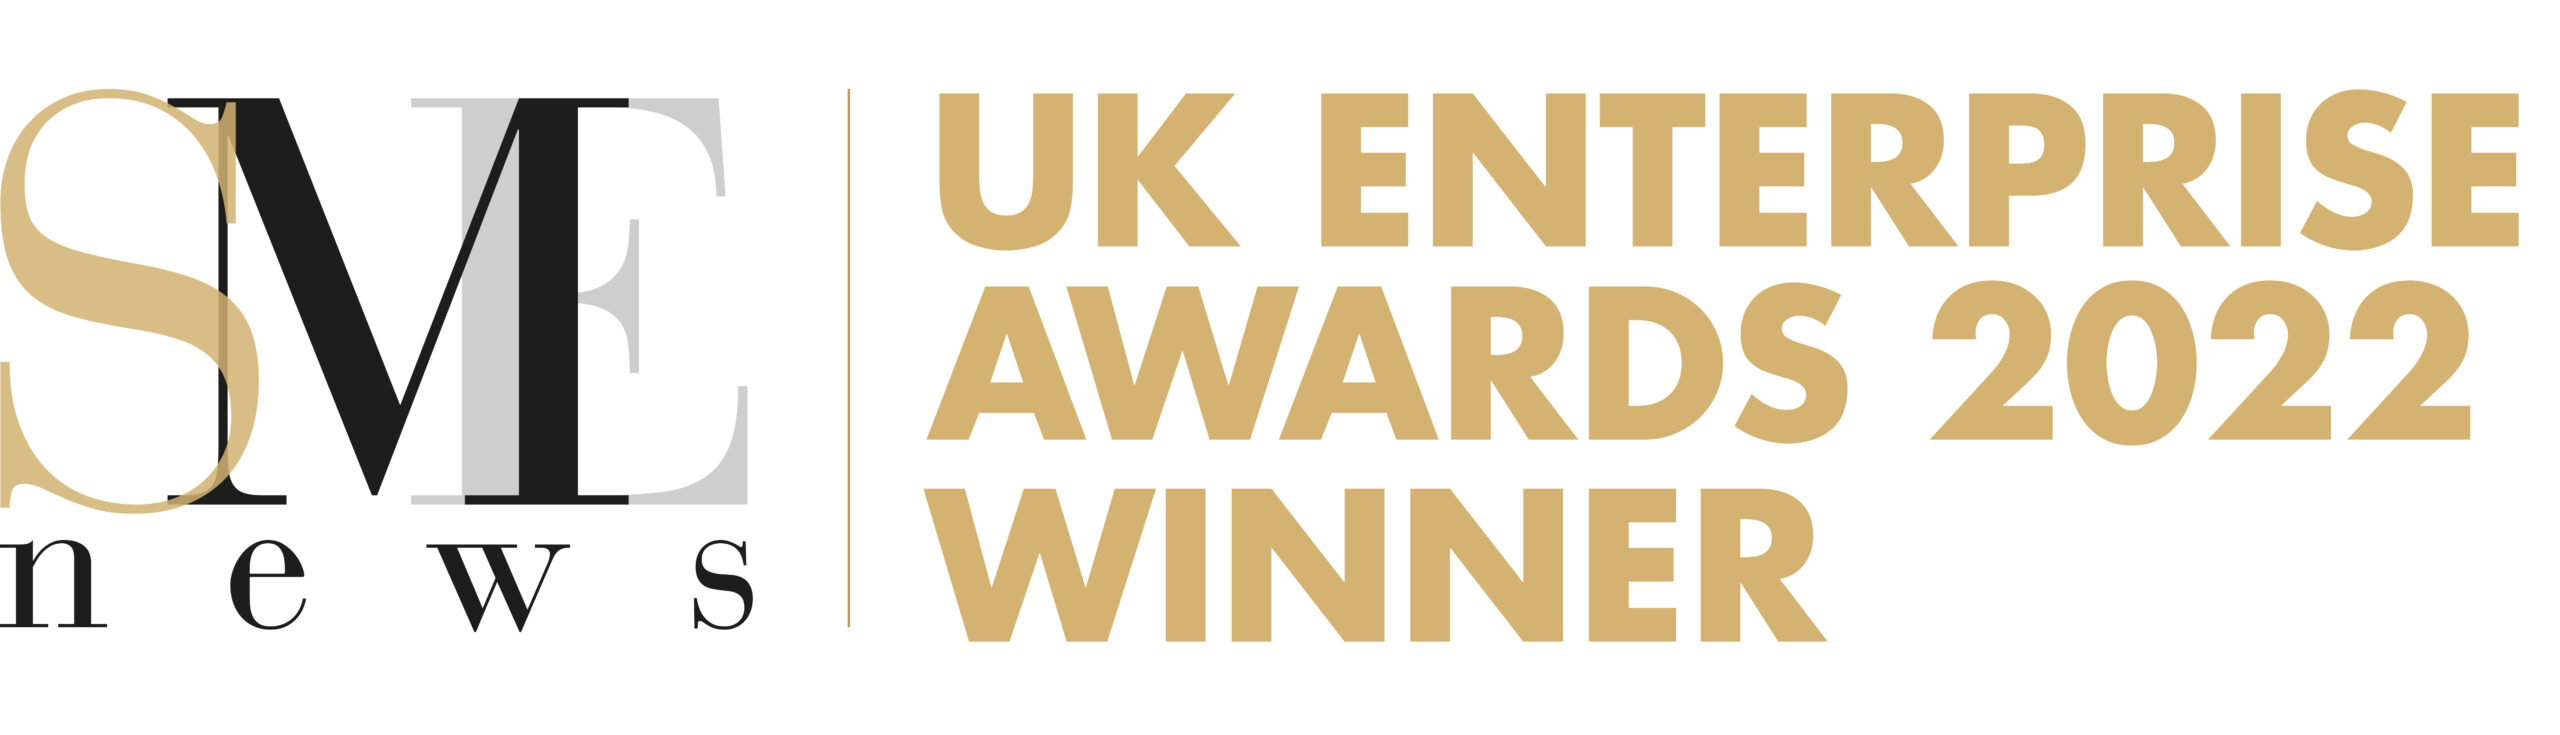 UK Enterprise Awards Logo 2022 WINNERS LOGO